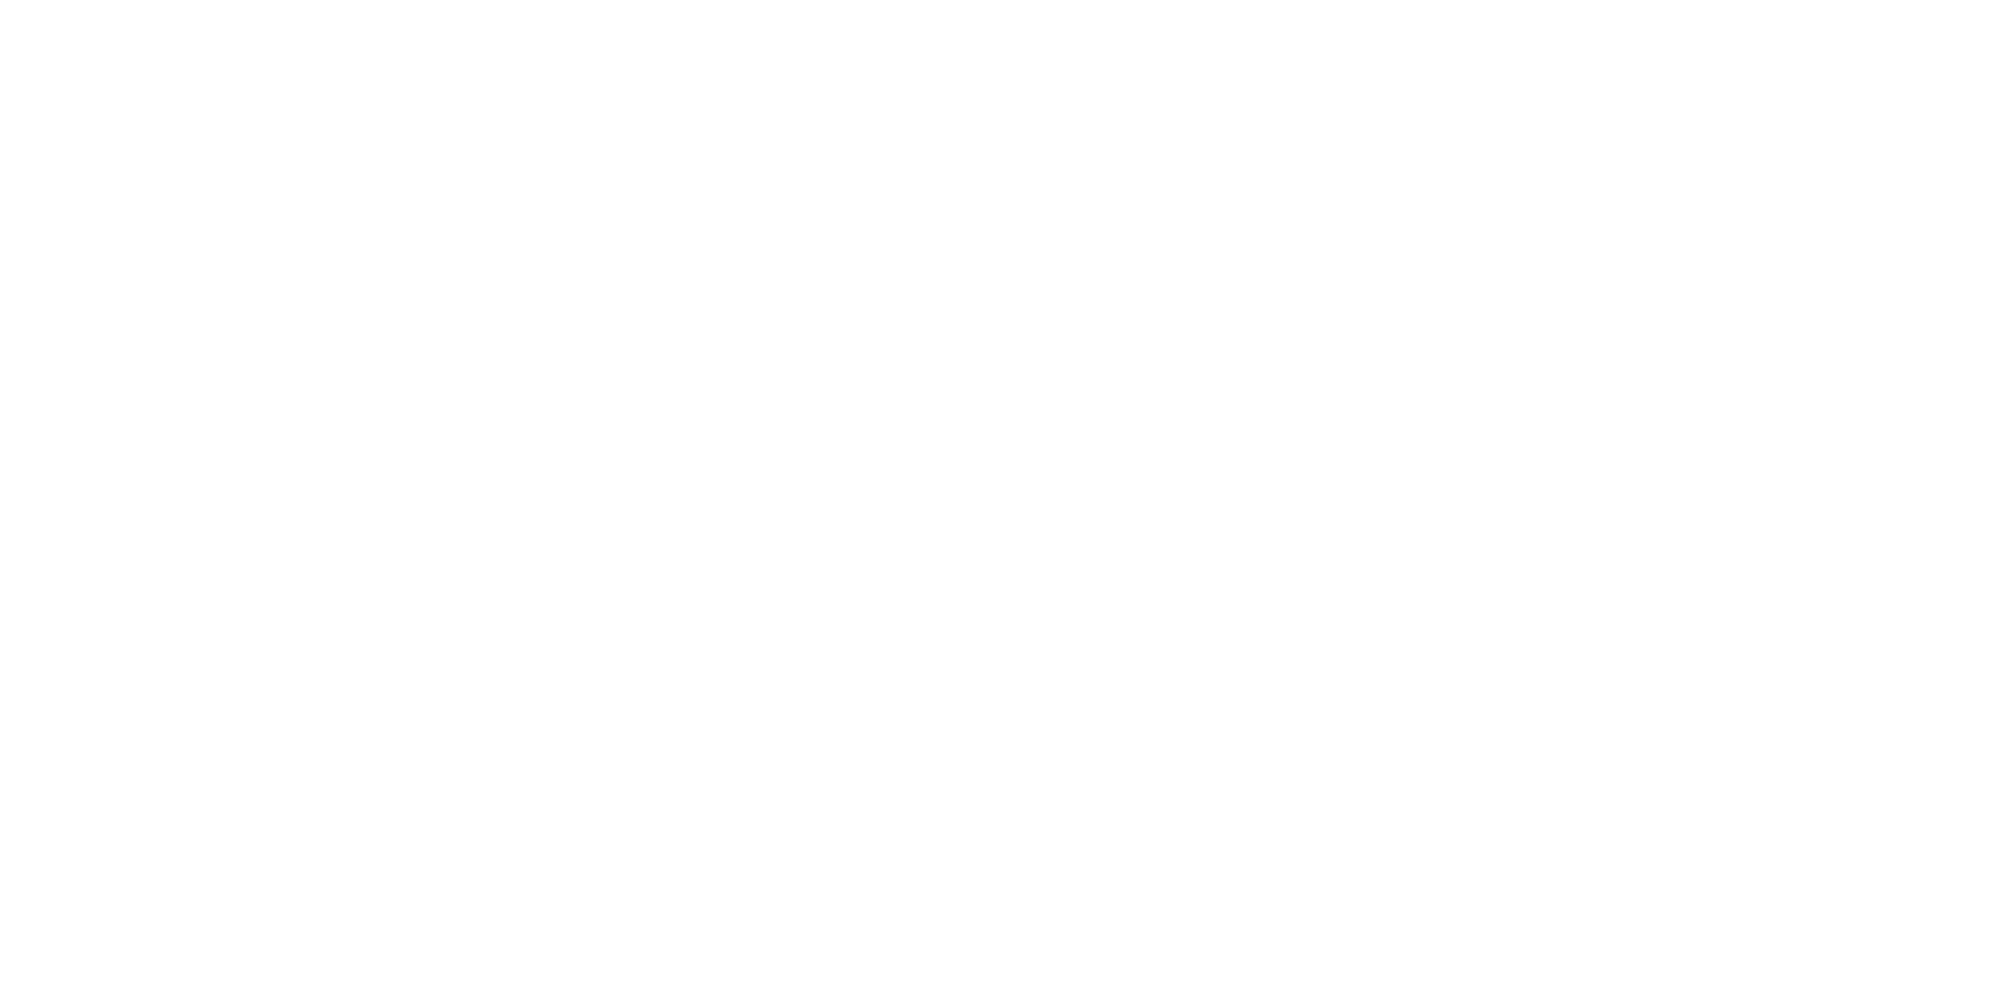 STAWAG Logo